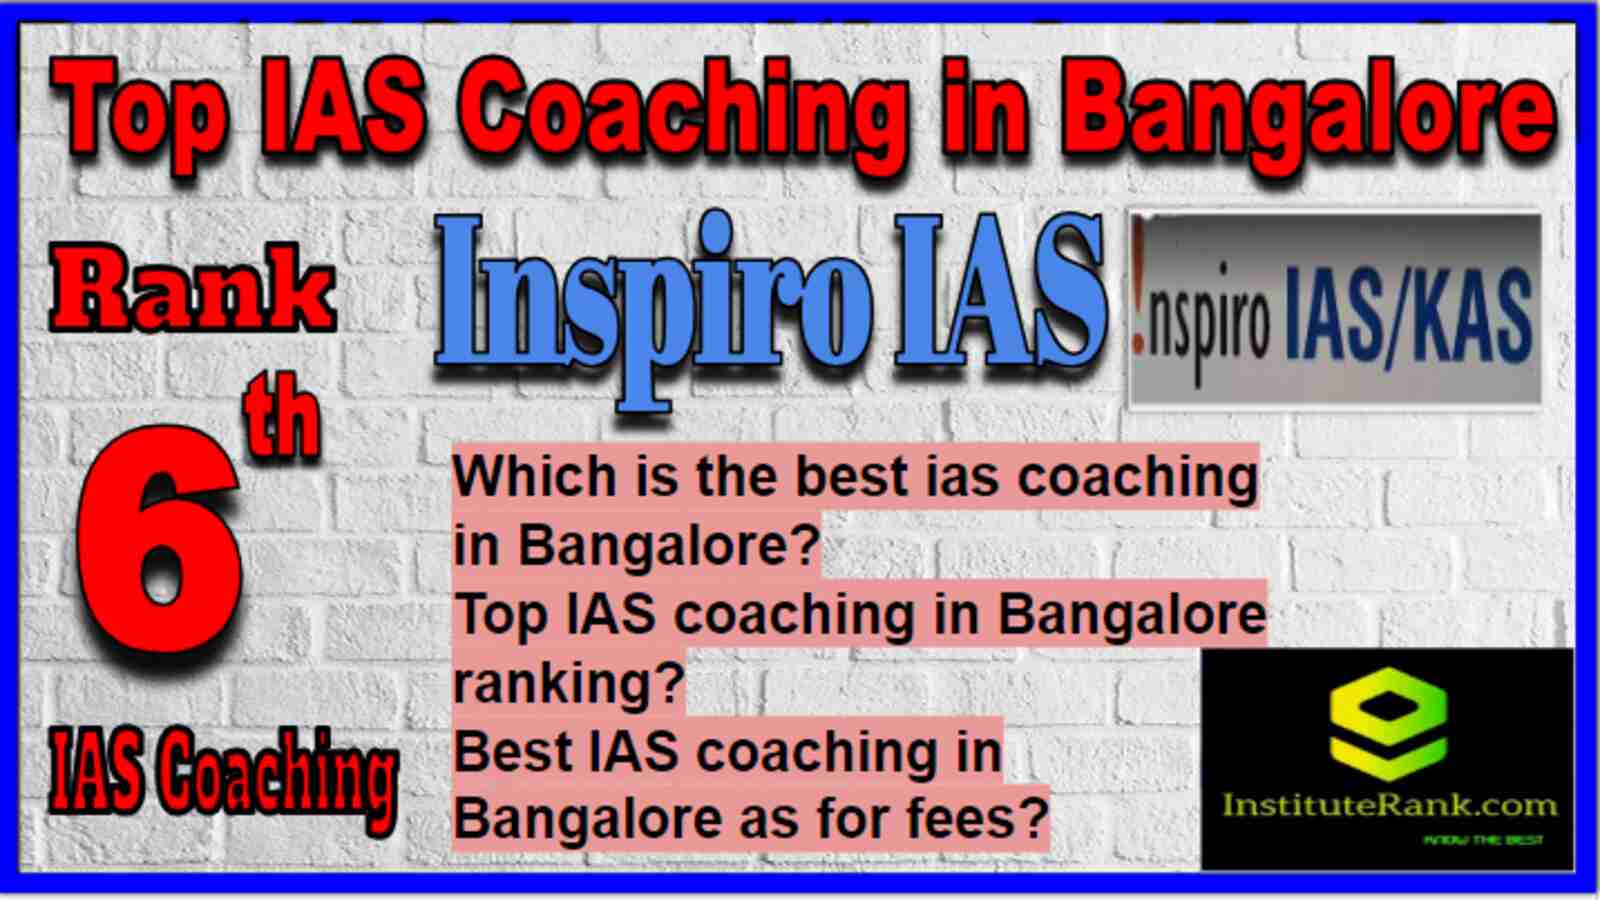 Rank 6 Top IAS Coaching in Bangalore